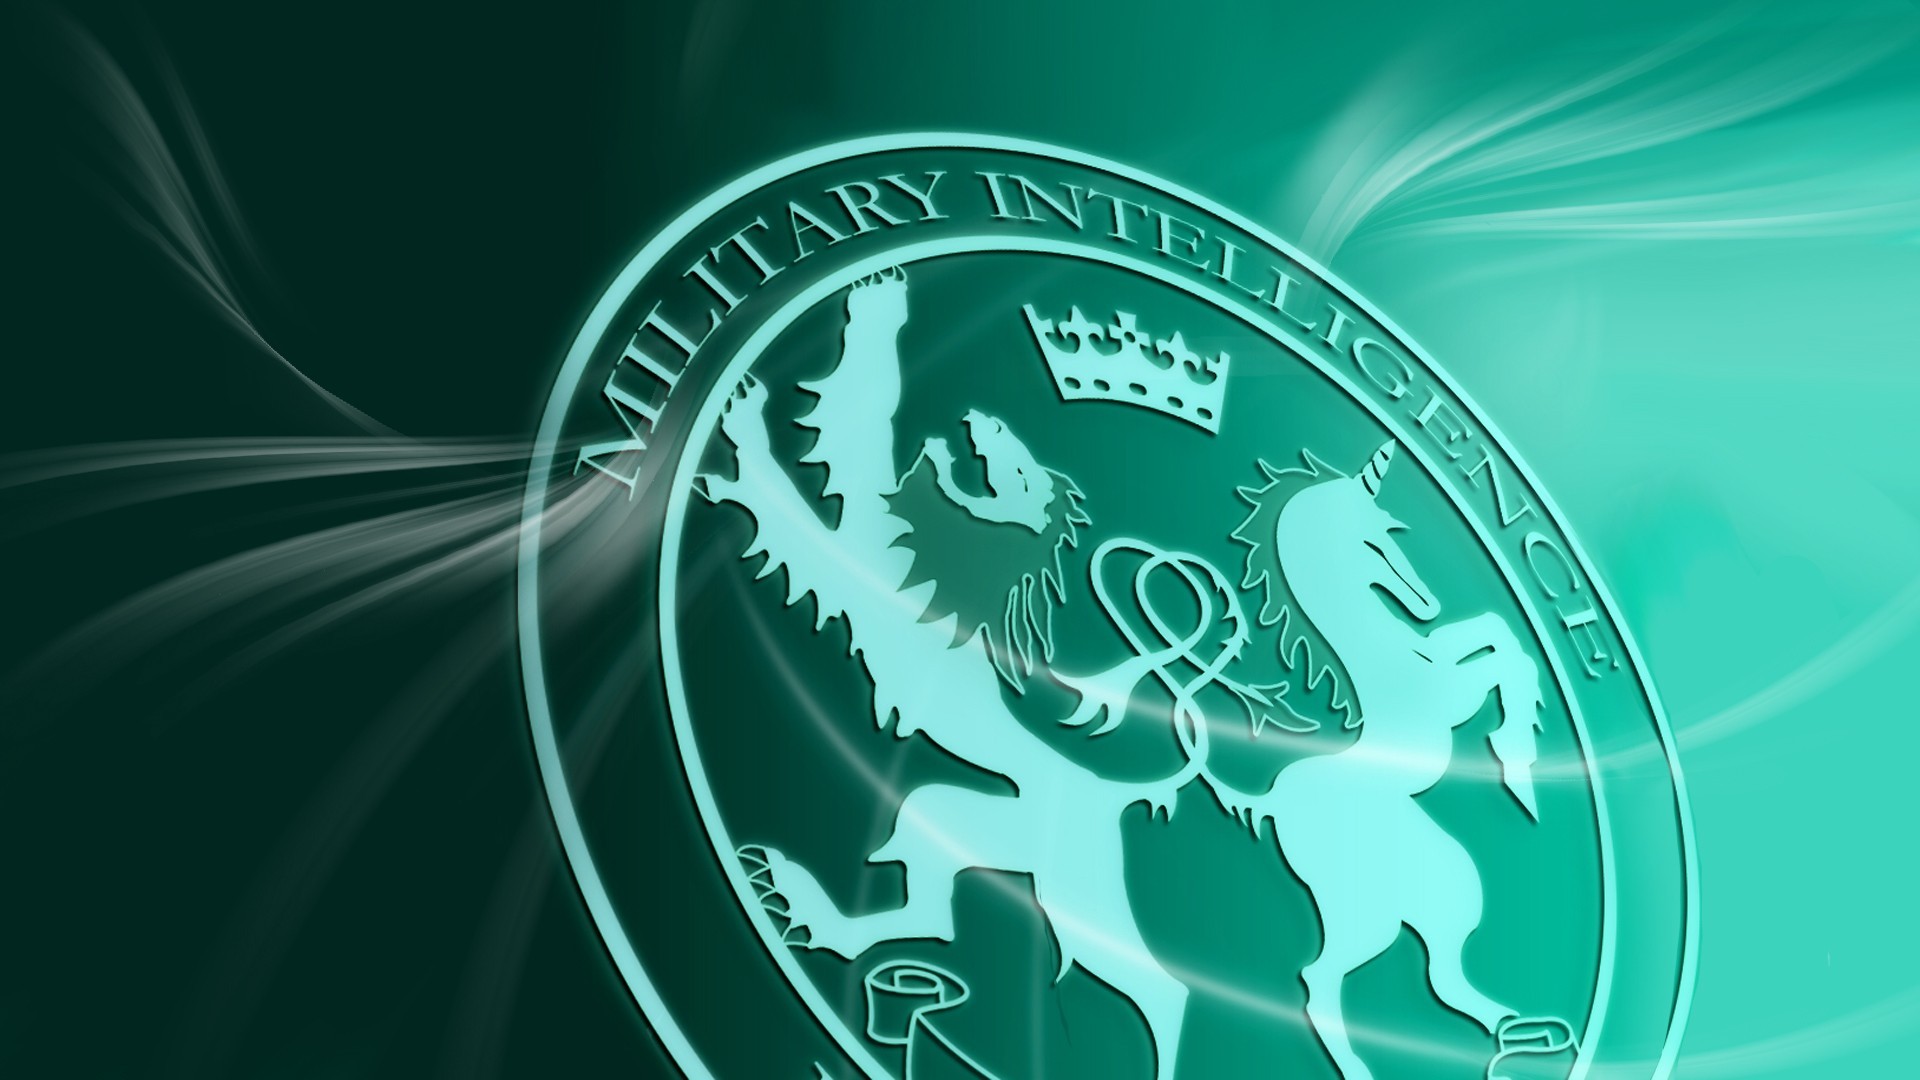 Casino royale james bond mi6 military intelligence wallpaper ...